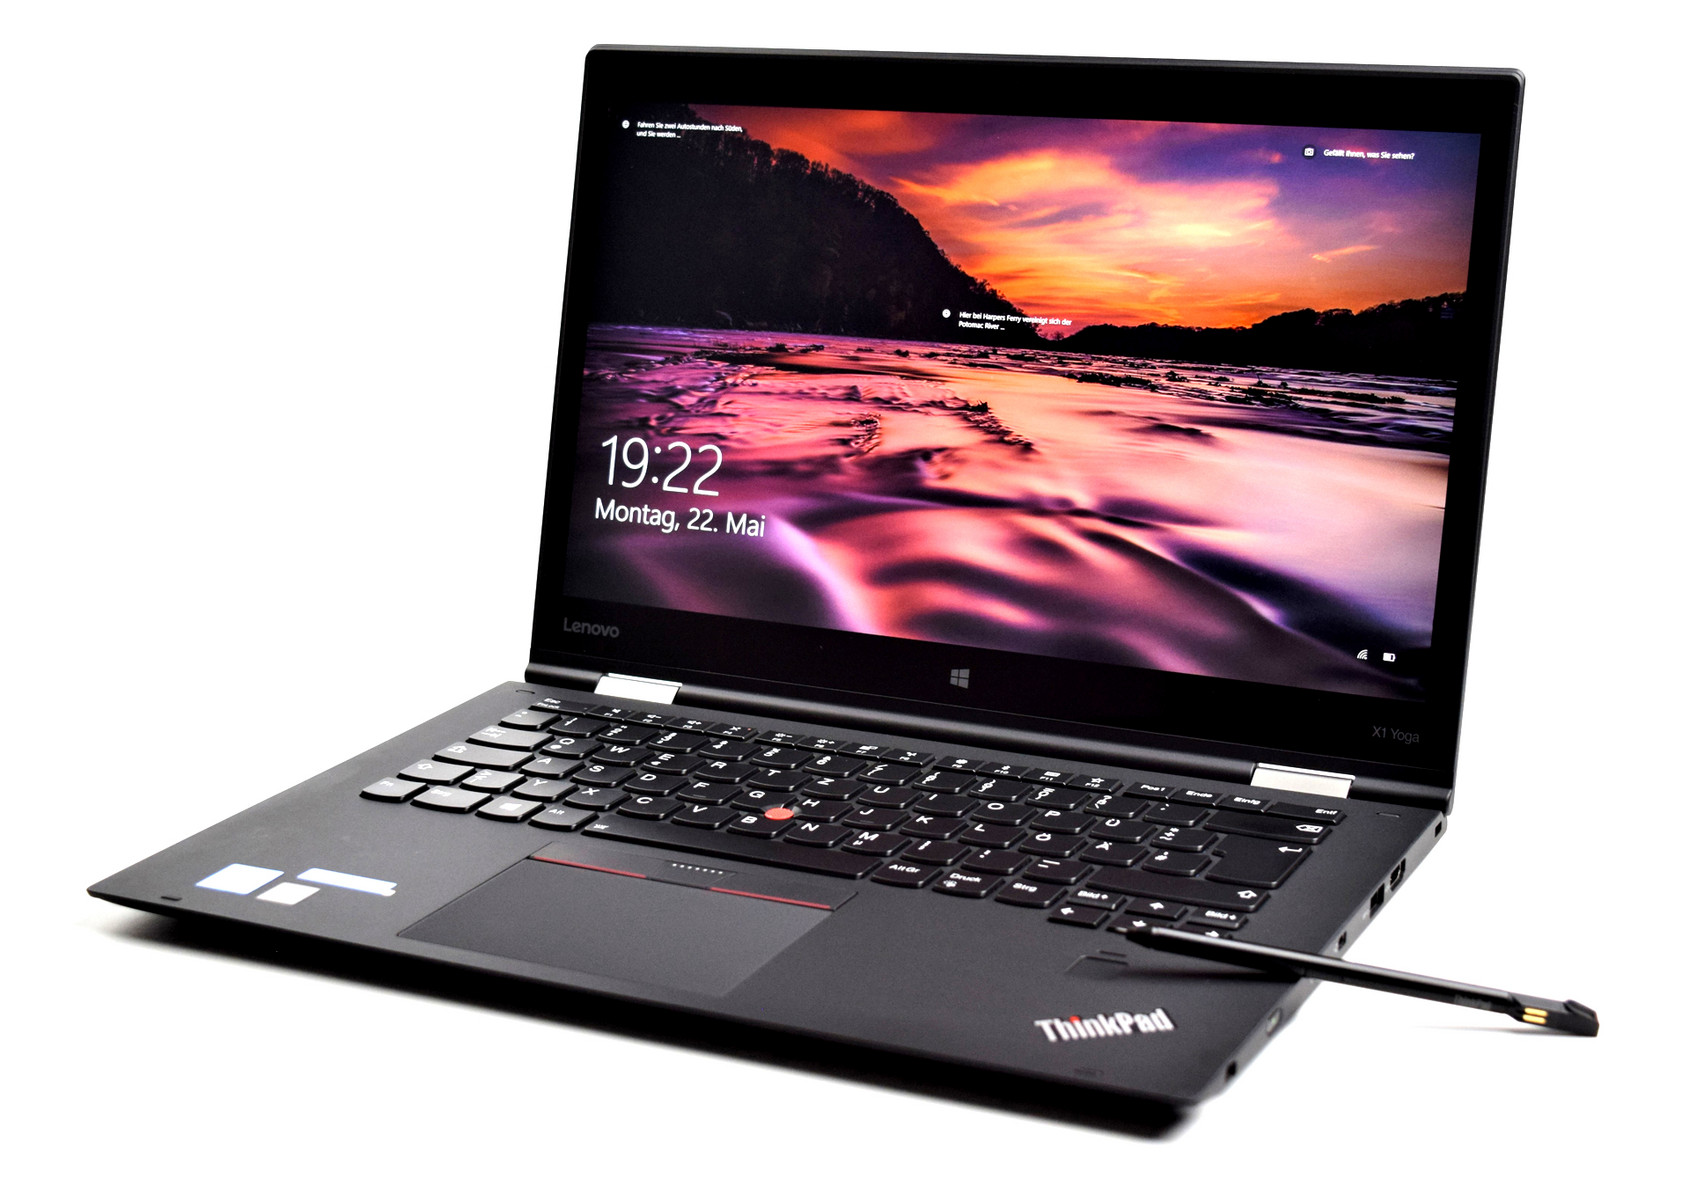 Thinkpad Lenovo X1 Yoga core i7, 16GB RAM, 360 Touch Screen